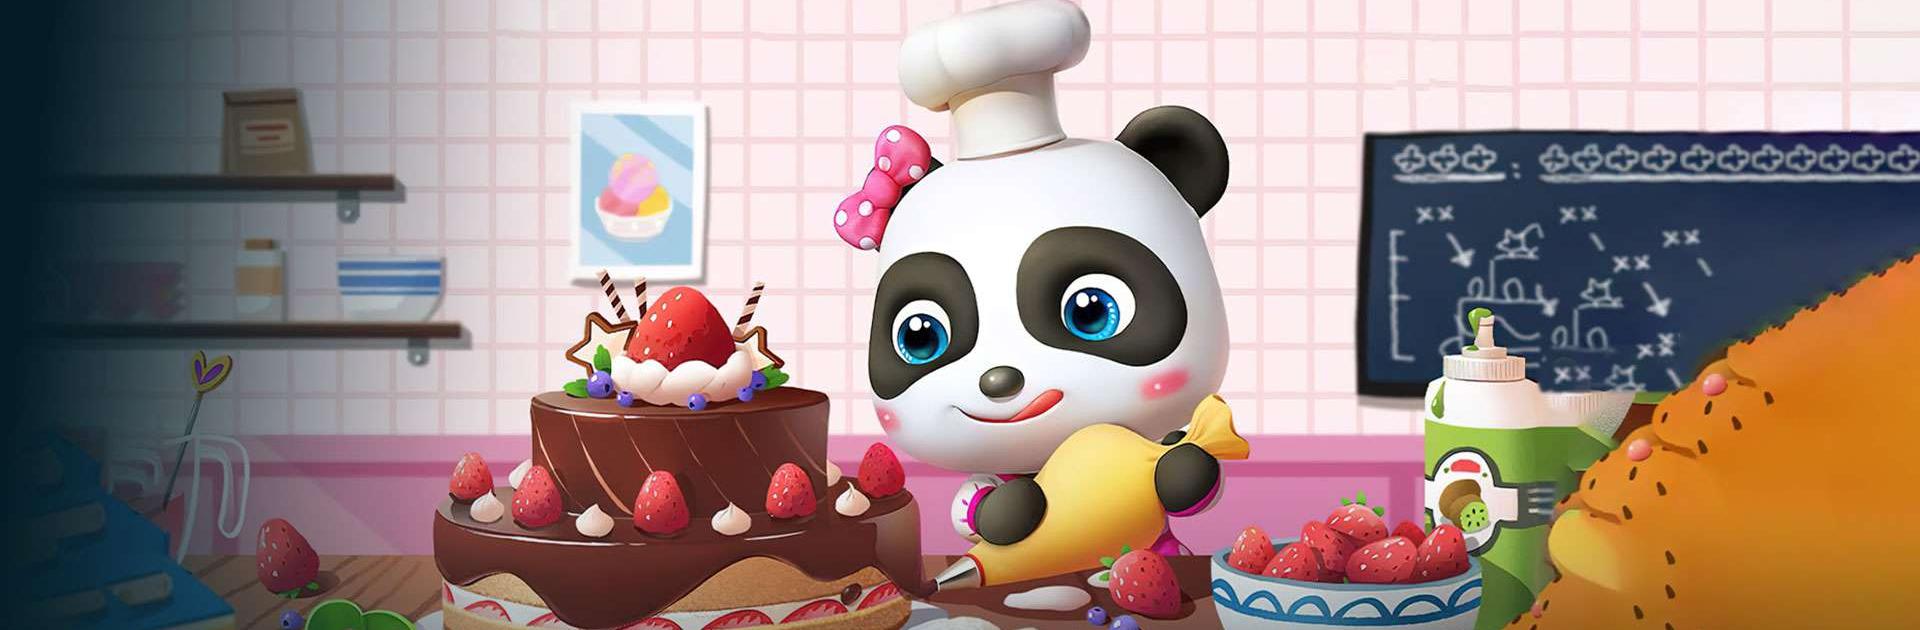 Little Panda's Bakery Story